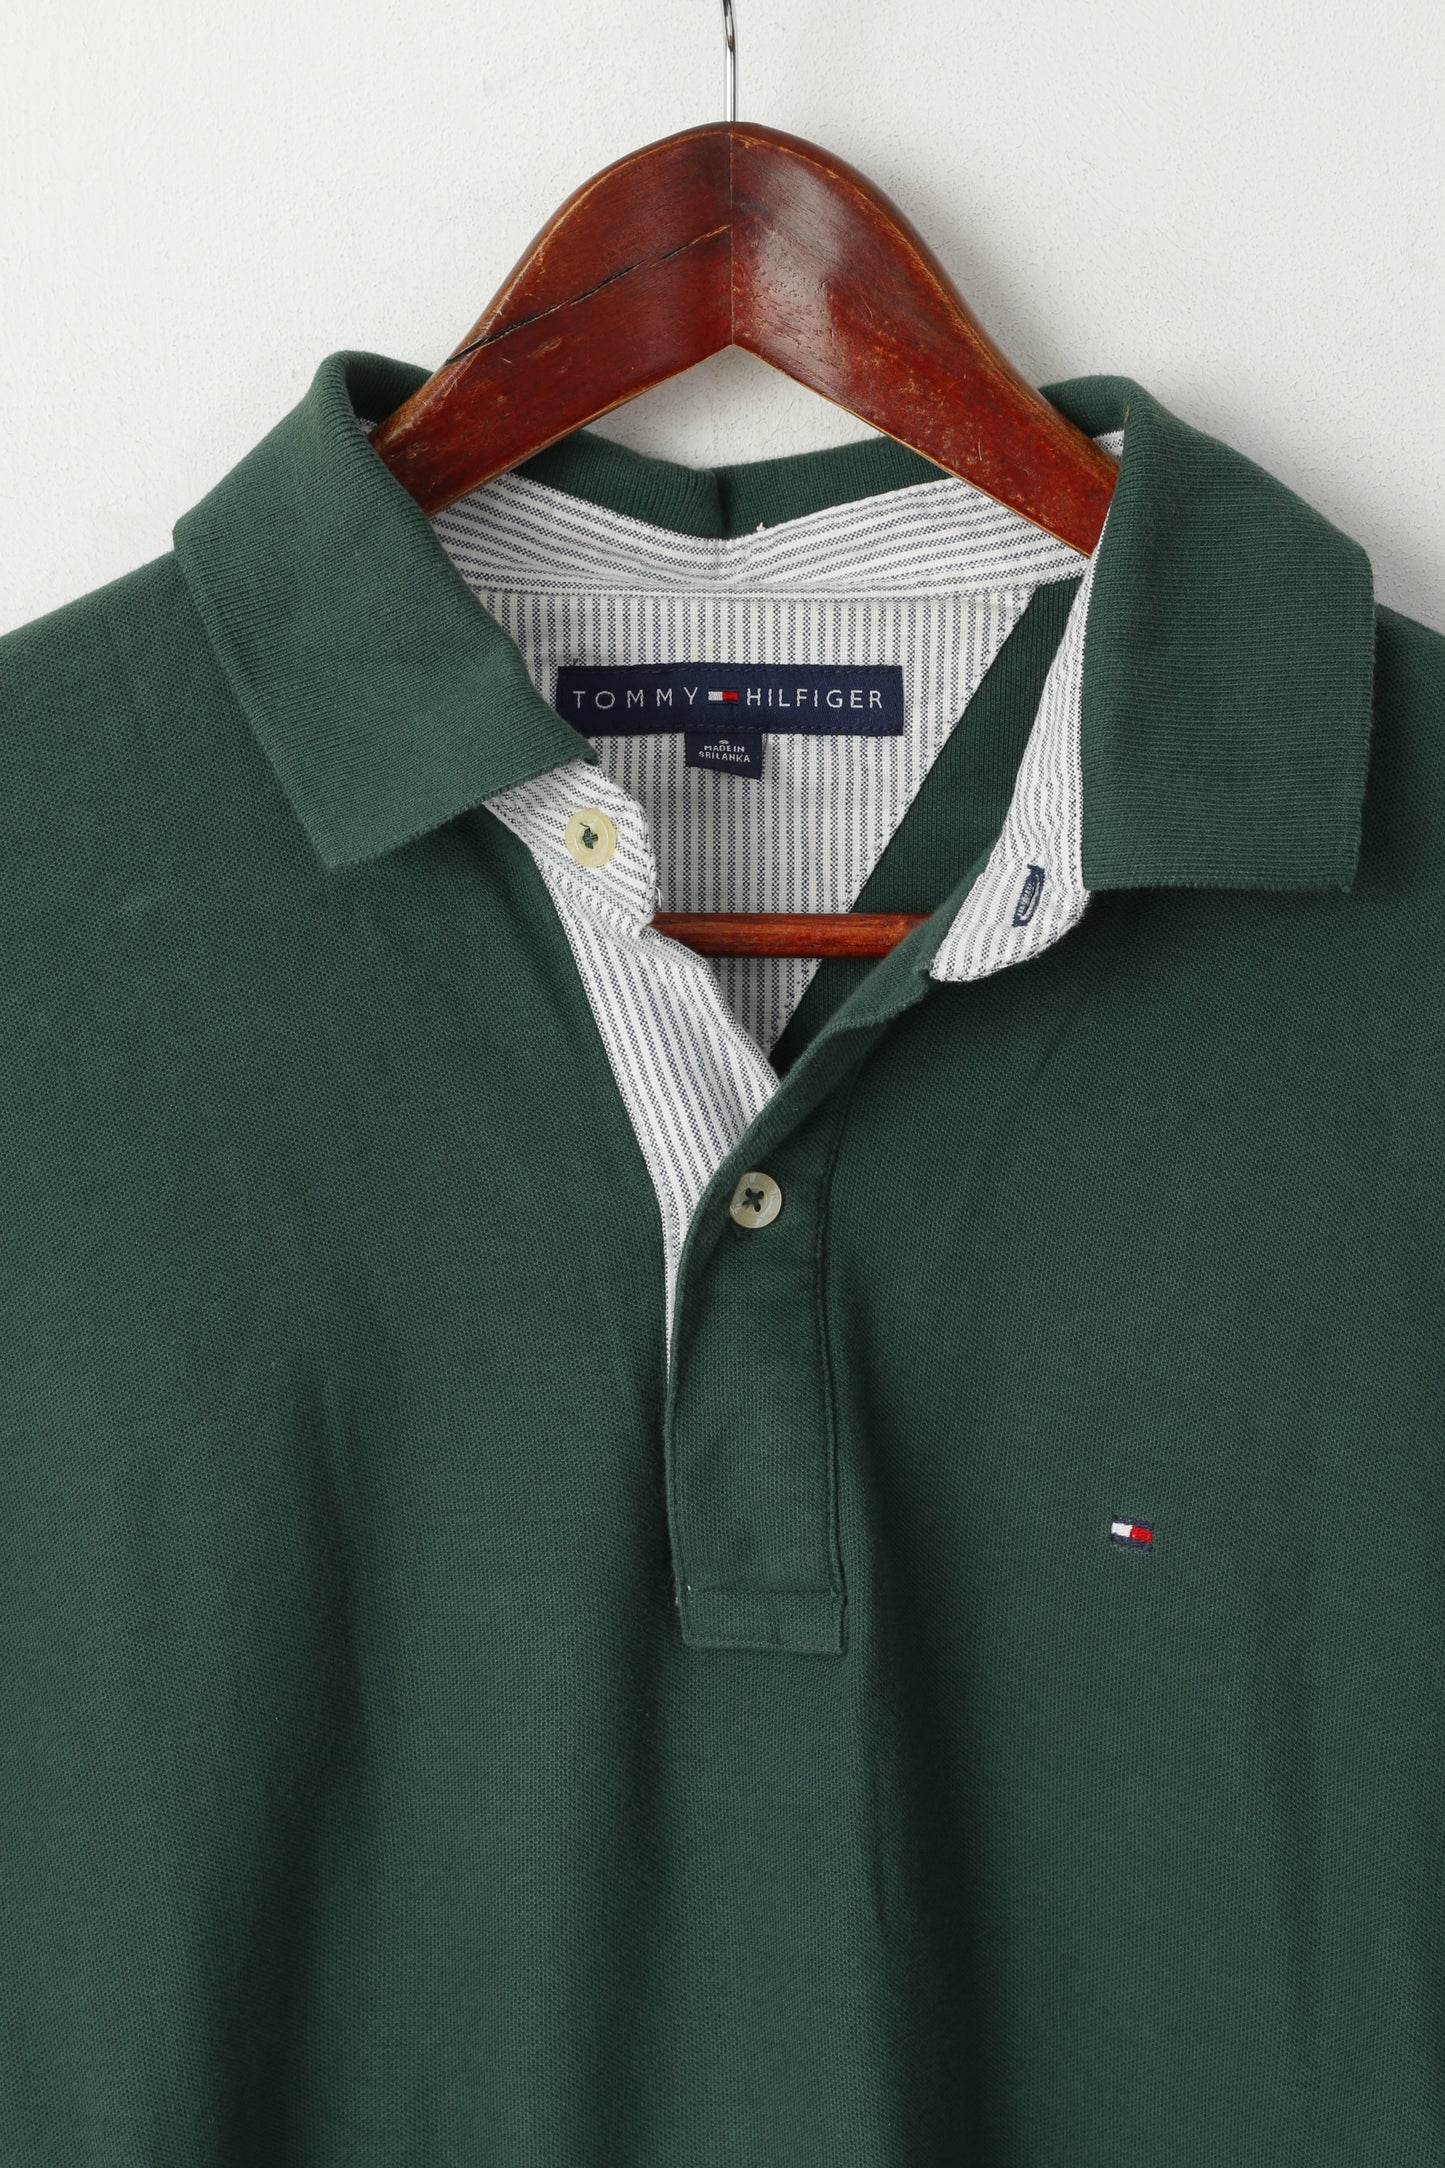 Tommy Hilfiger Men S Polo Shirt Green Cotton Plain Short Sleeve Fit Top